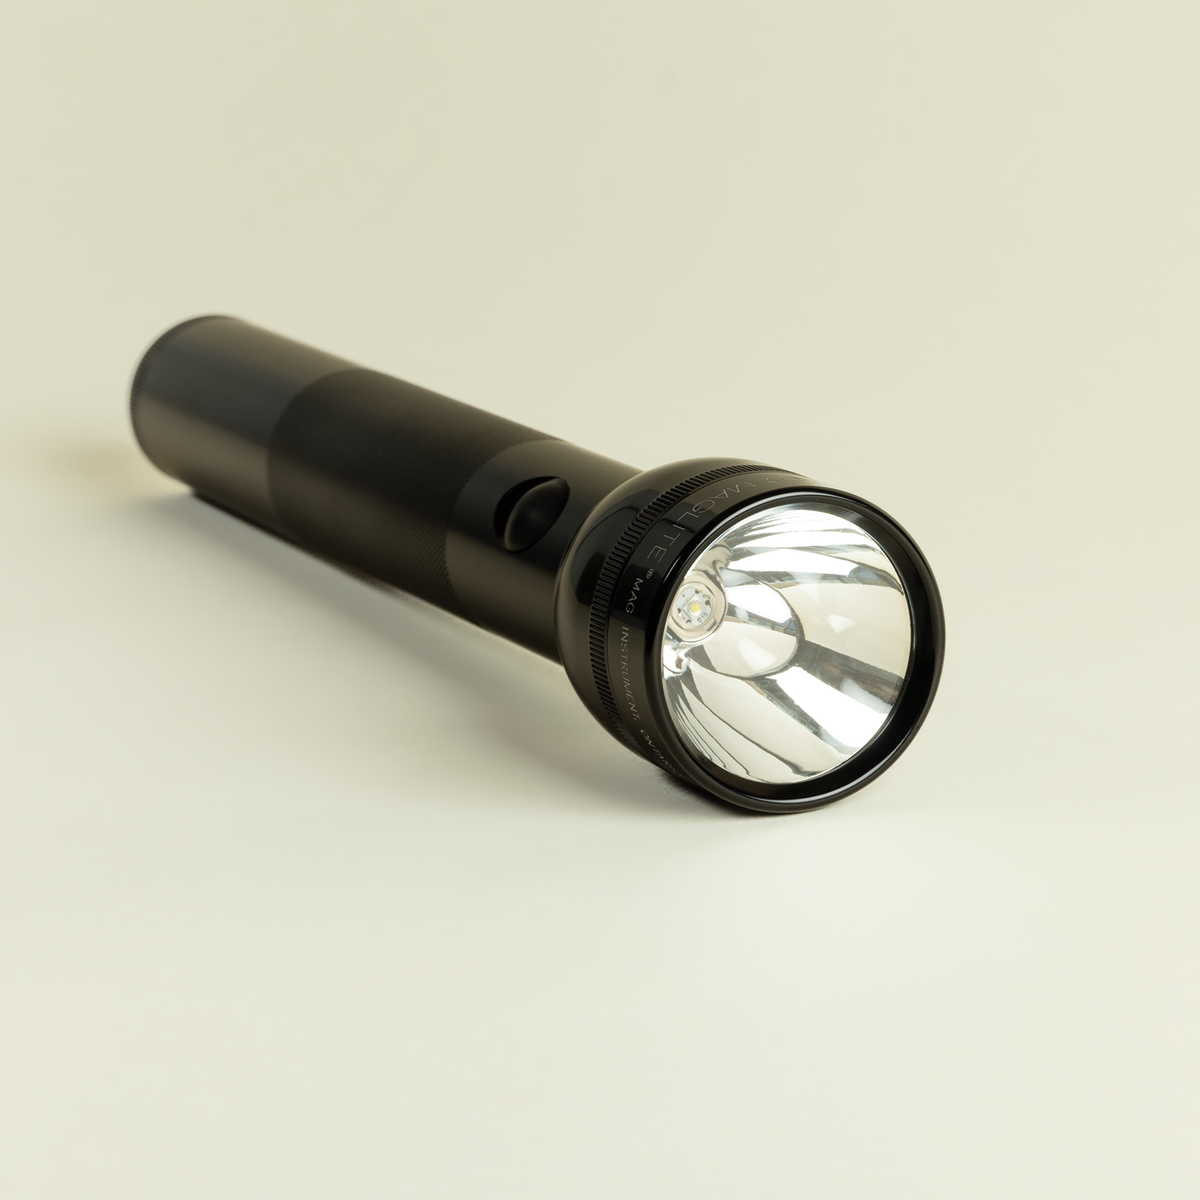 Maglite LED Flashlight 3 Cell D